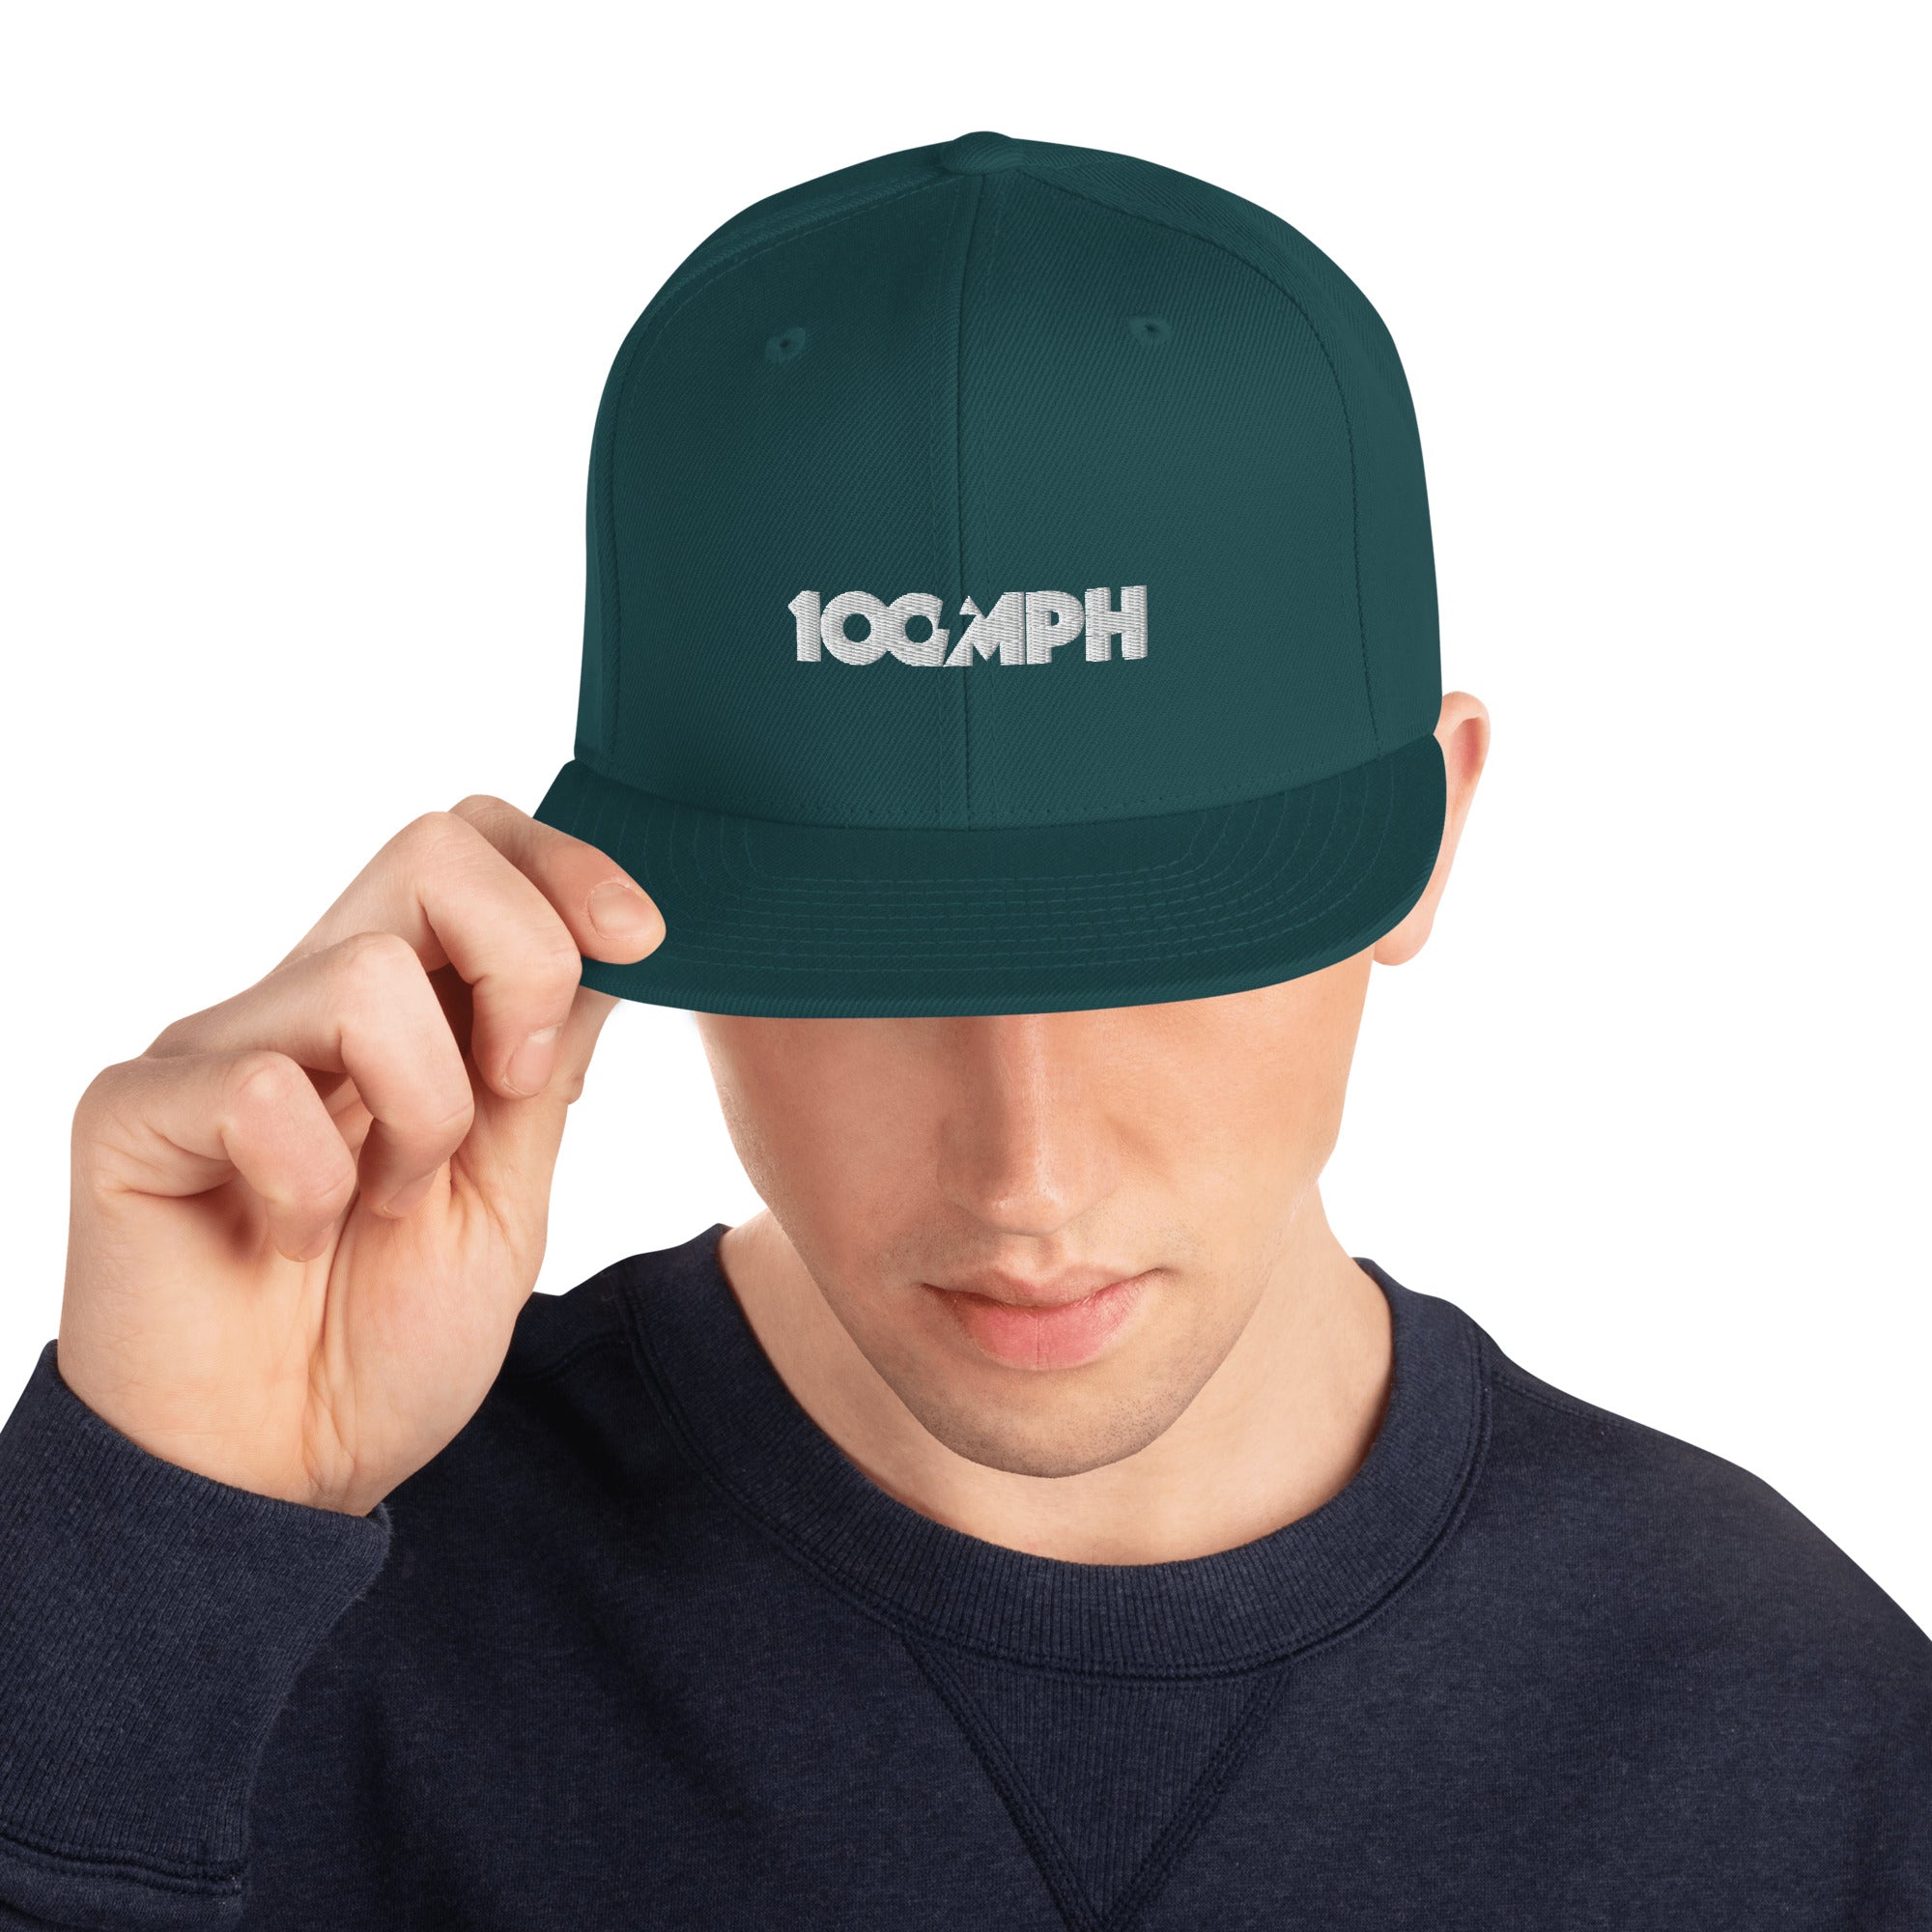 100MPH Snapback Hat